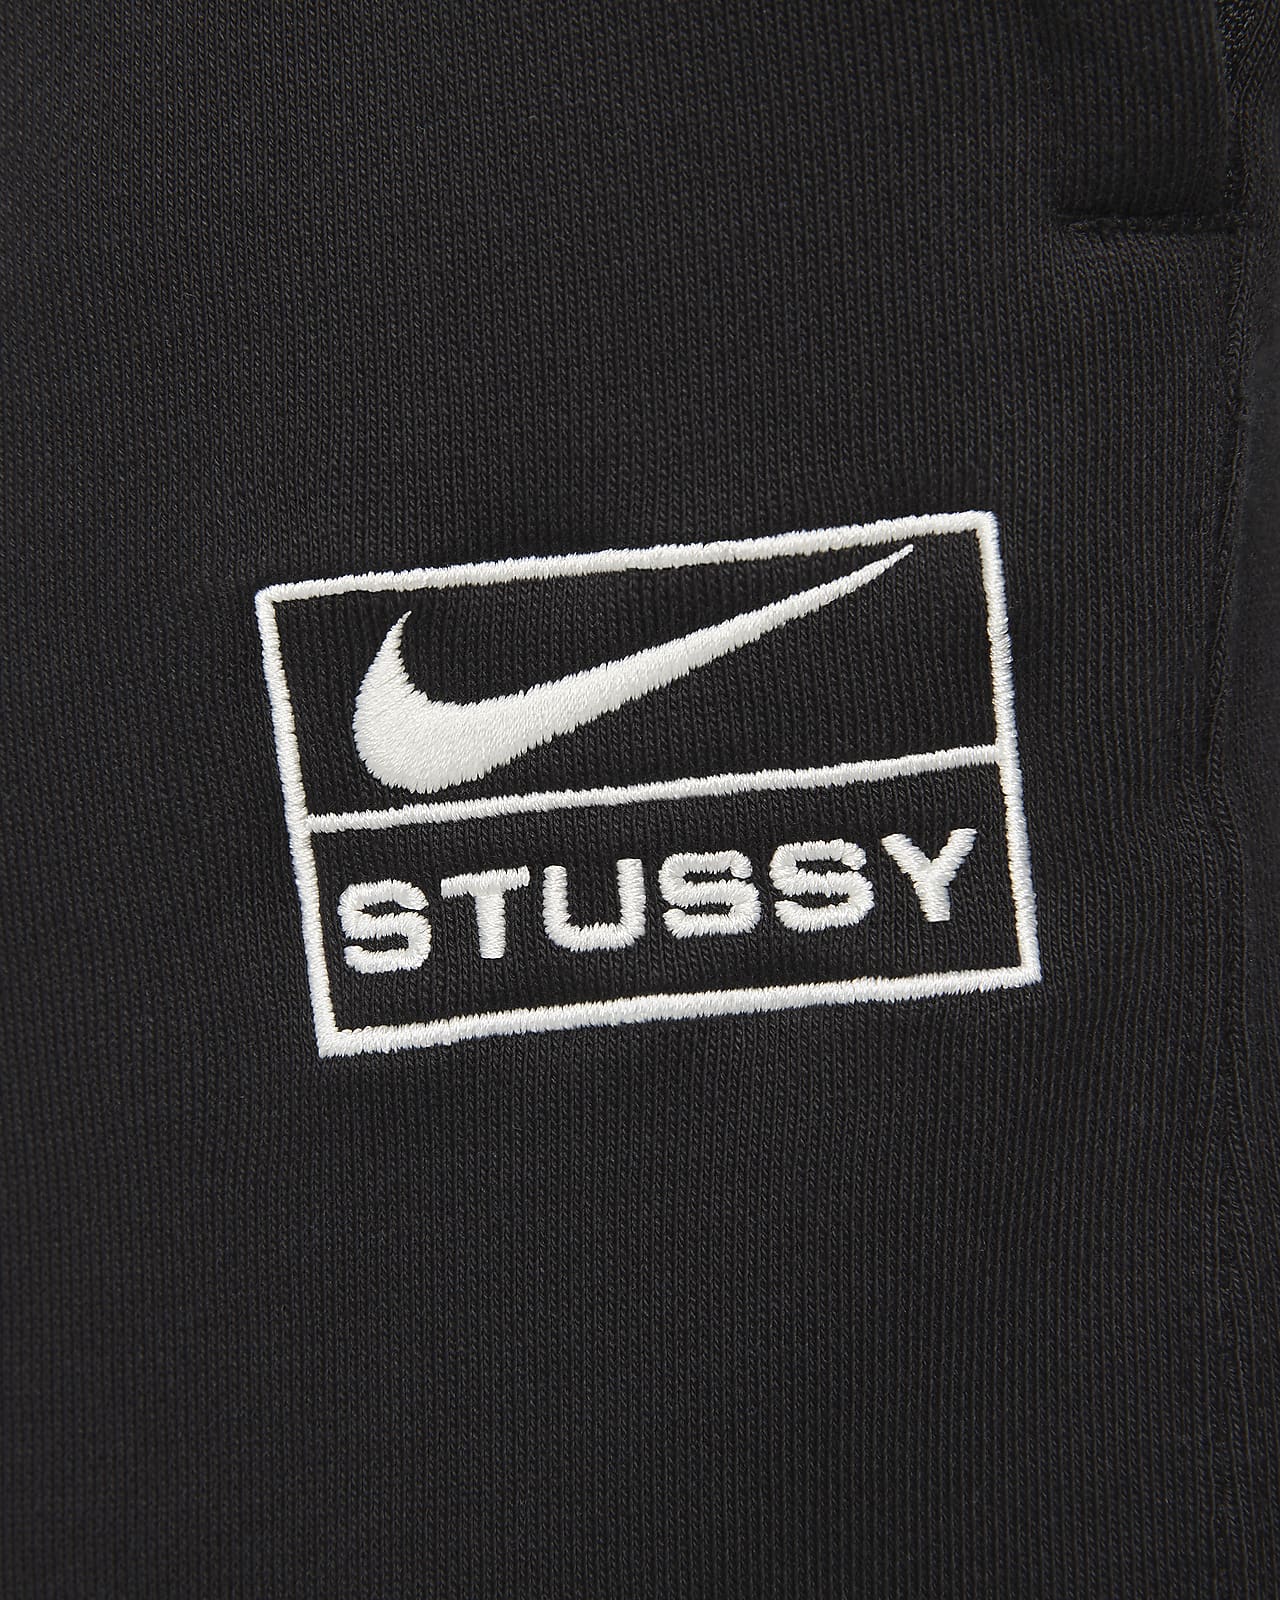 Nike x Stüssy Washed Fleece Pants